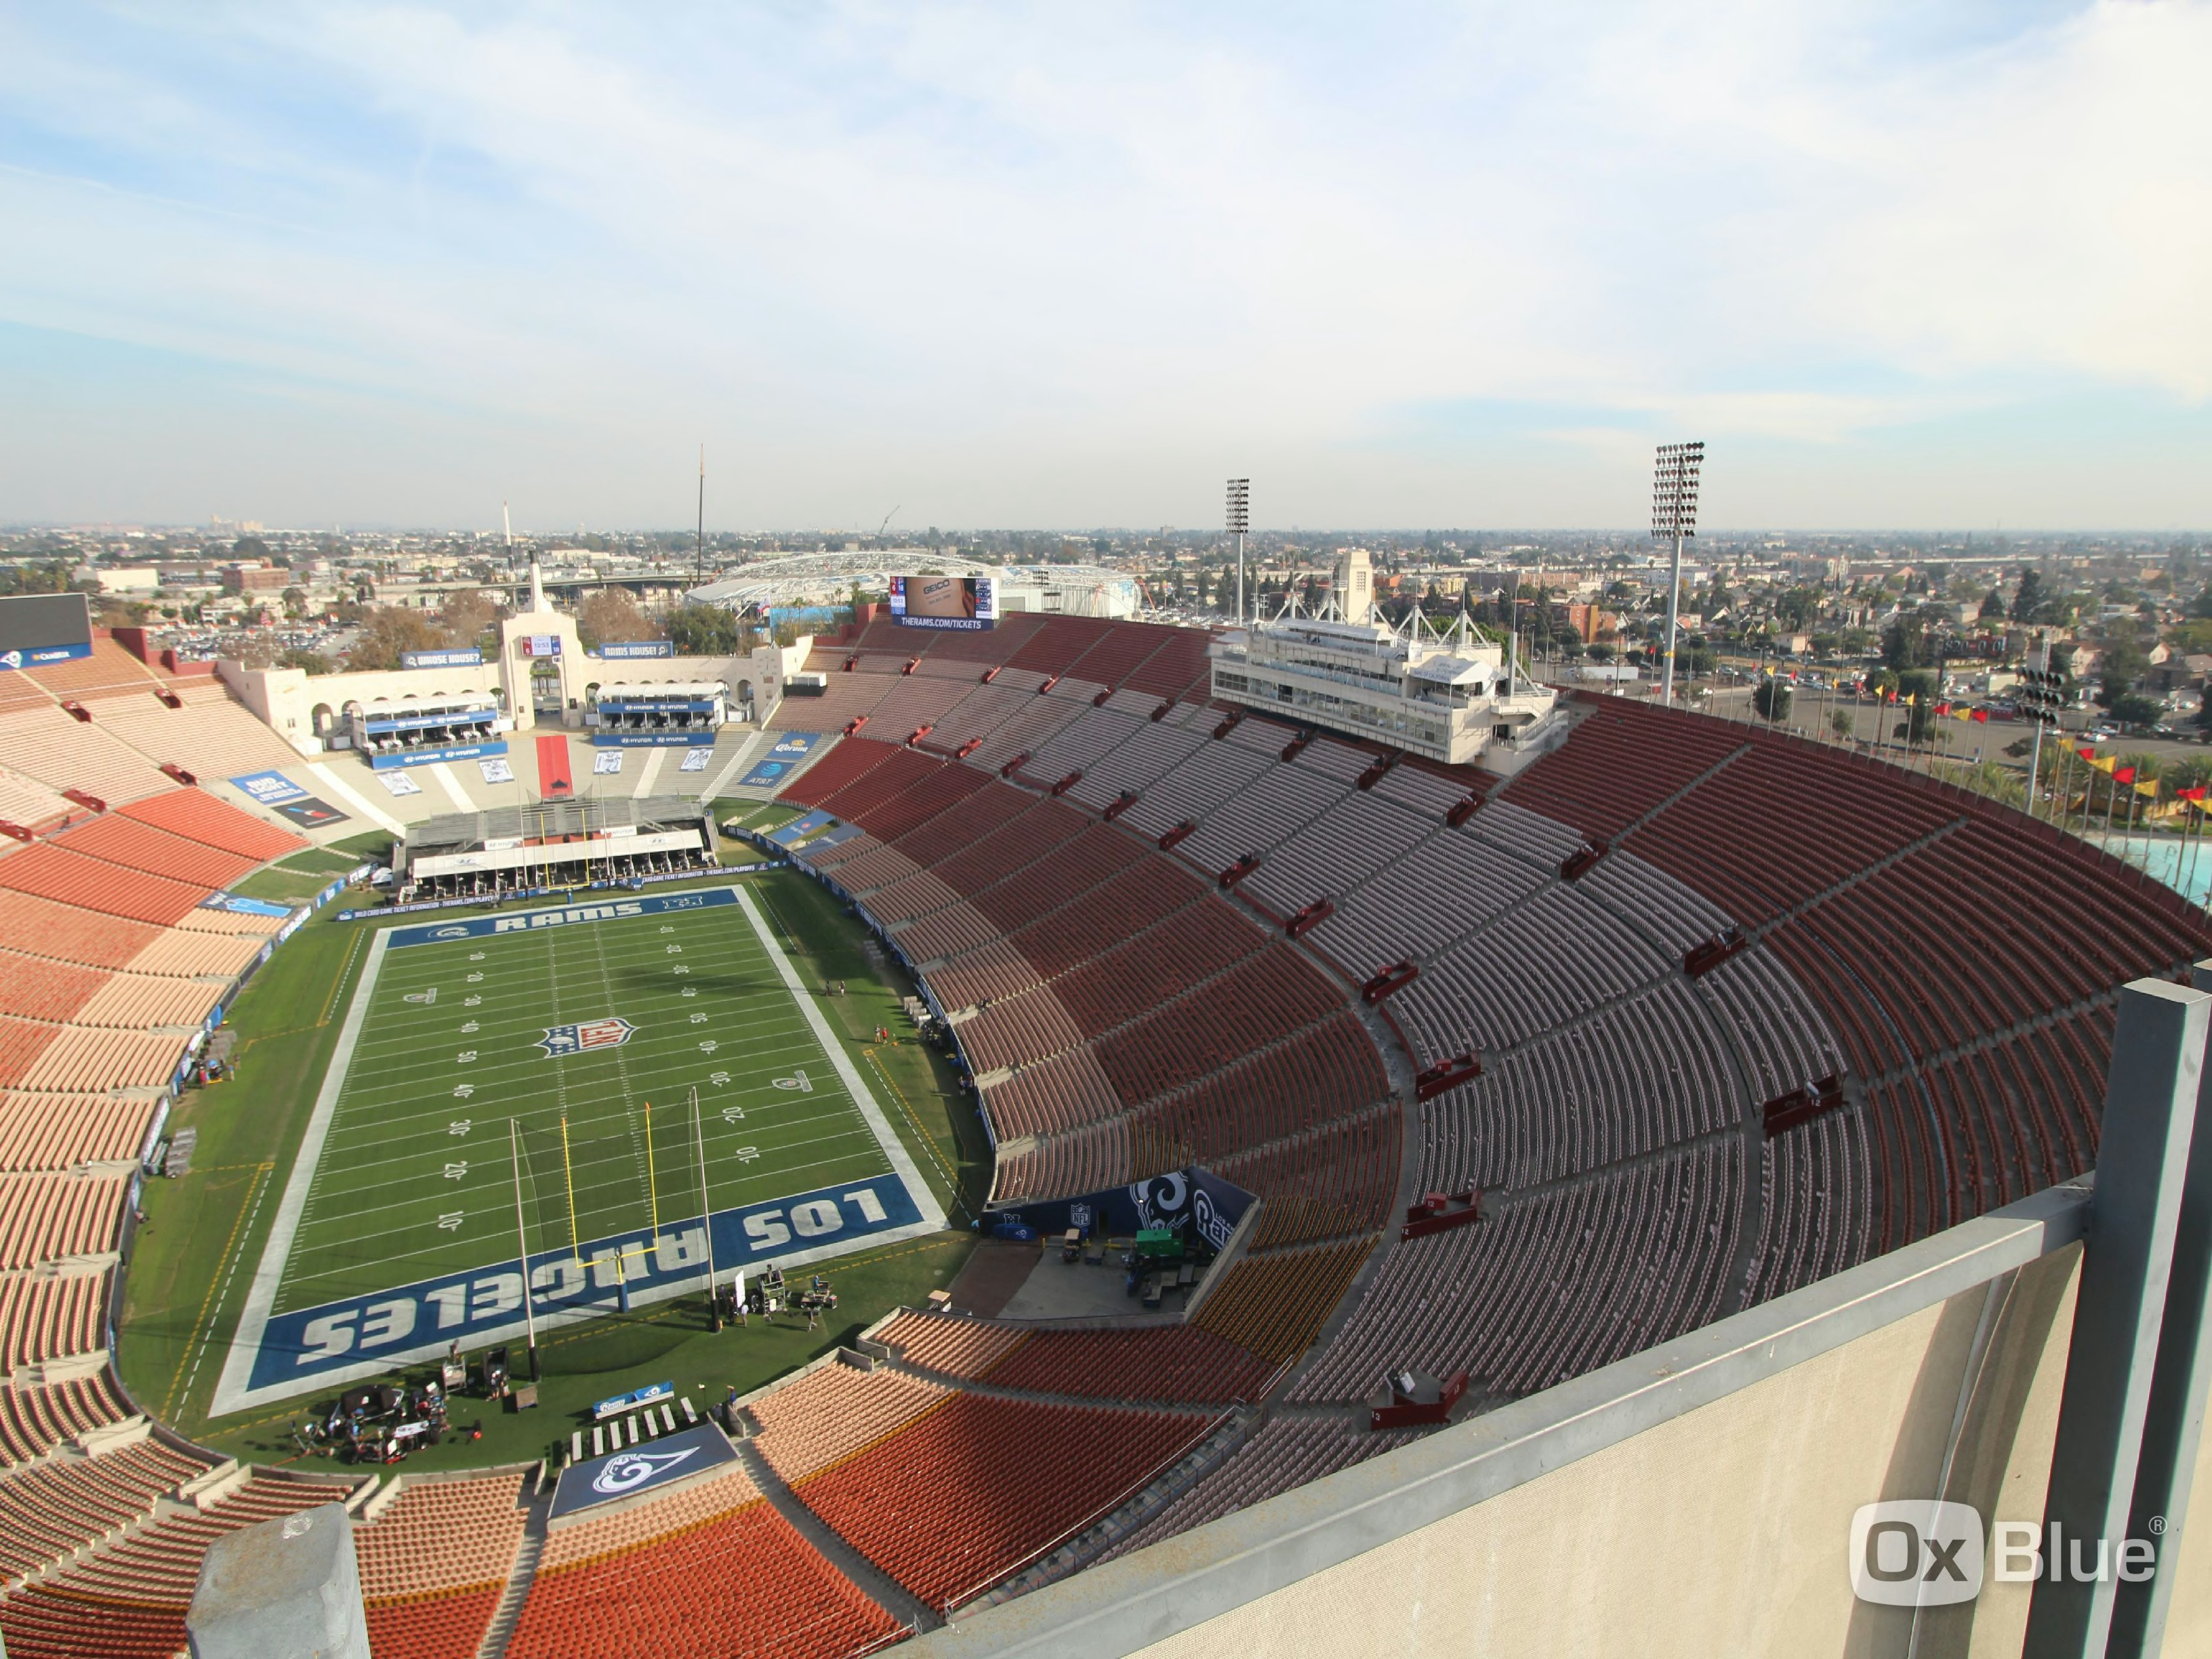 USC Football: Coliseum renovation looks stunning on live construction cam